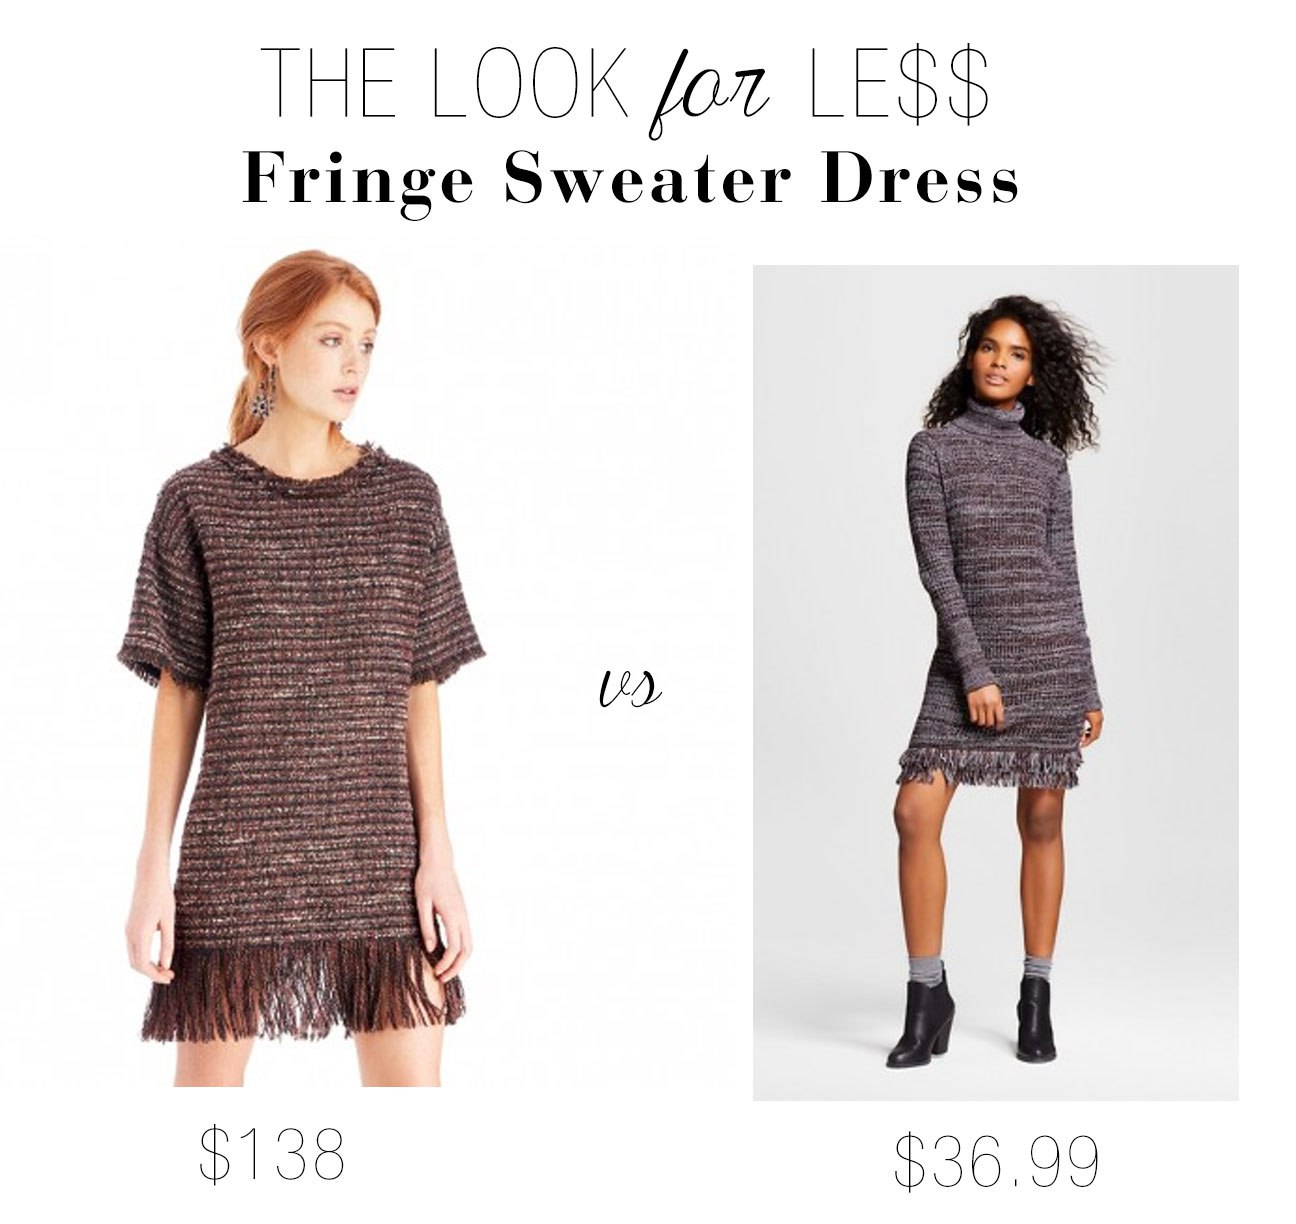 Try the fringe dress trend for less.